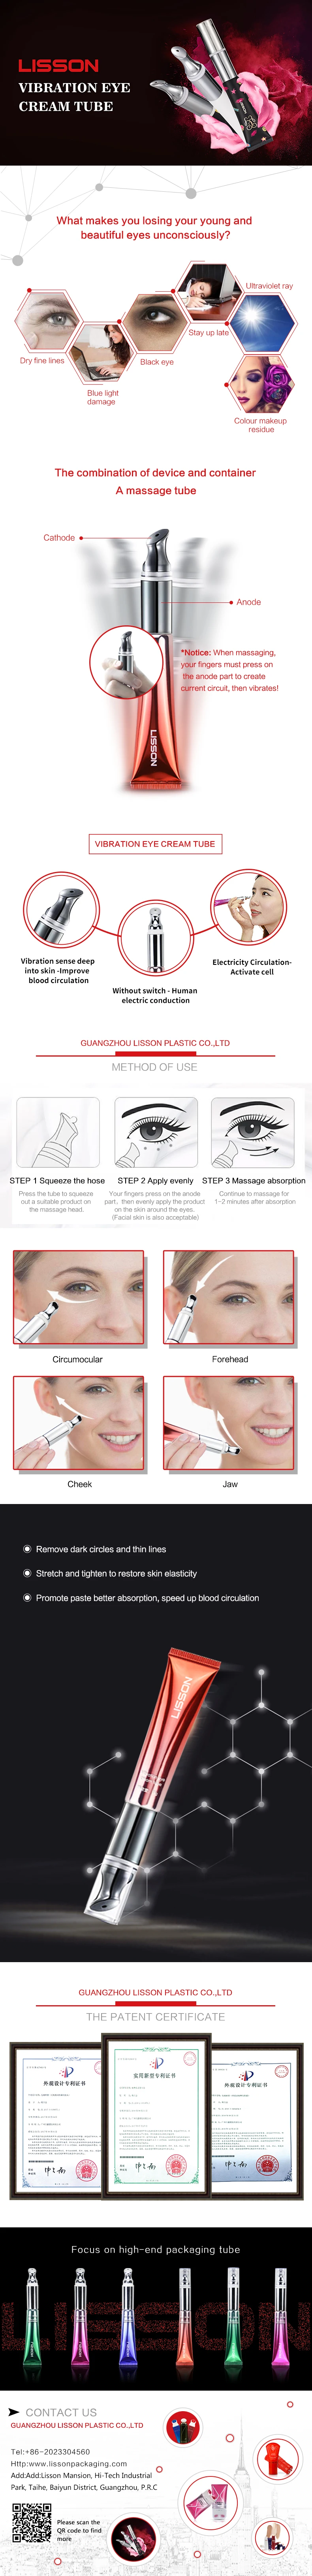 15-20ml cosmetic plastic tube packing vibration eye cream tube without switch